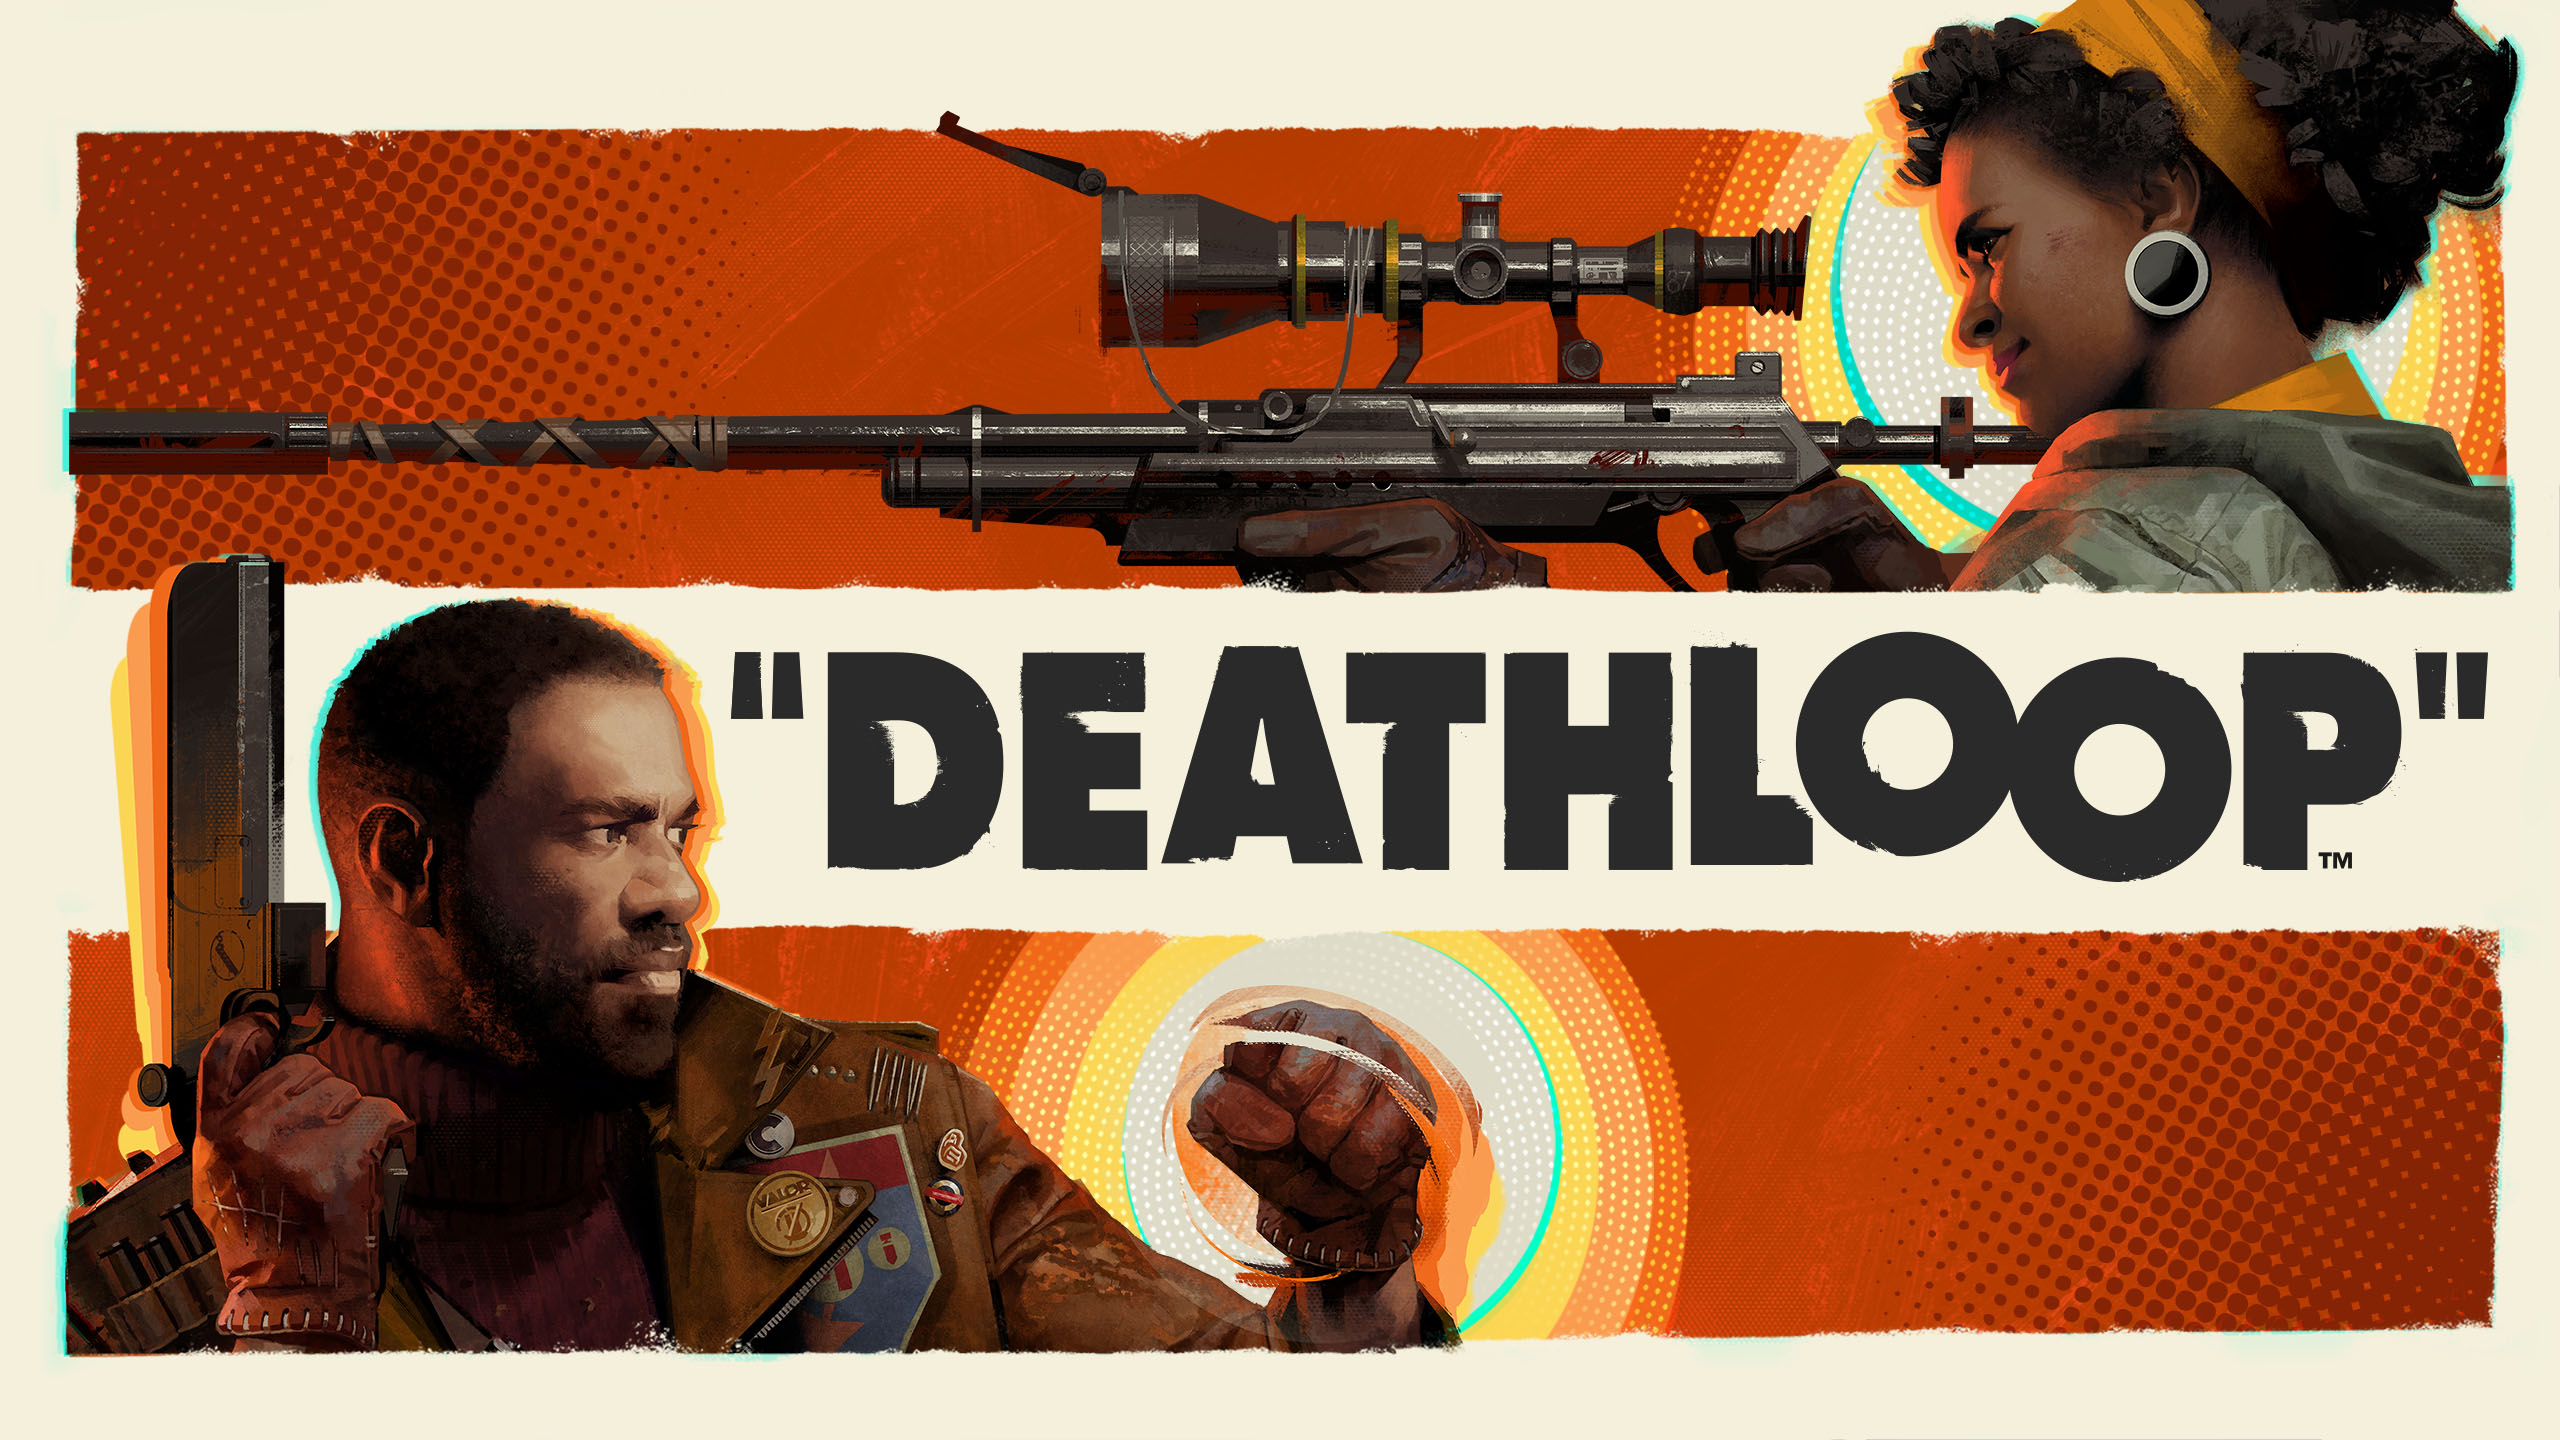 Deathloop PC Game Latest Version Free Download